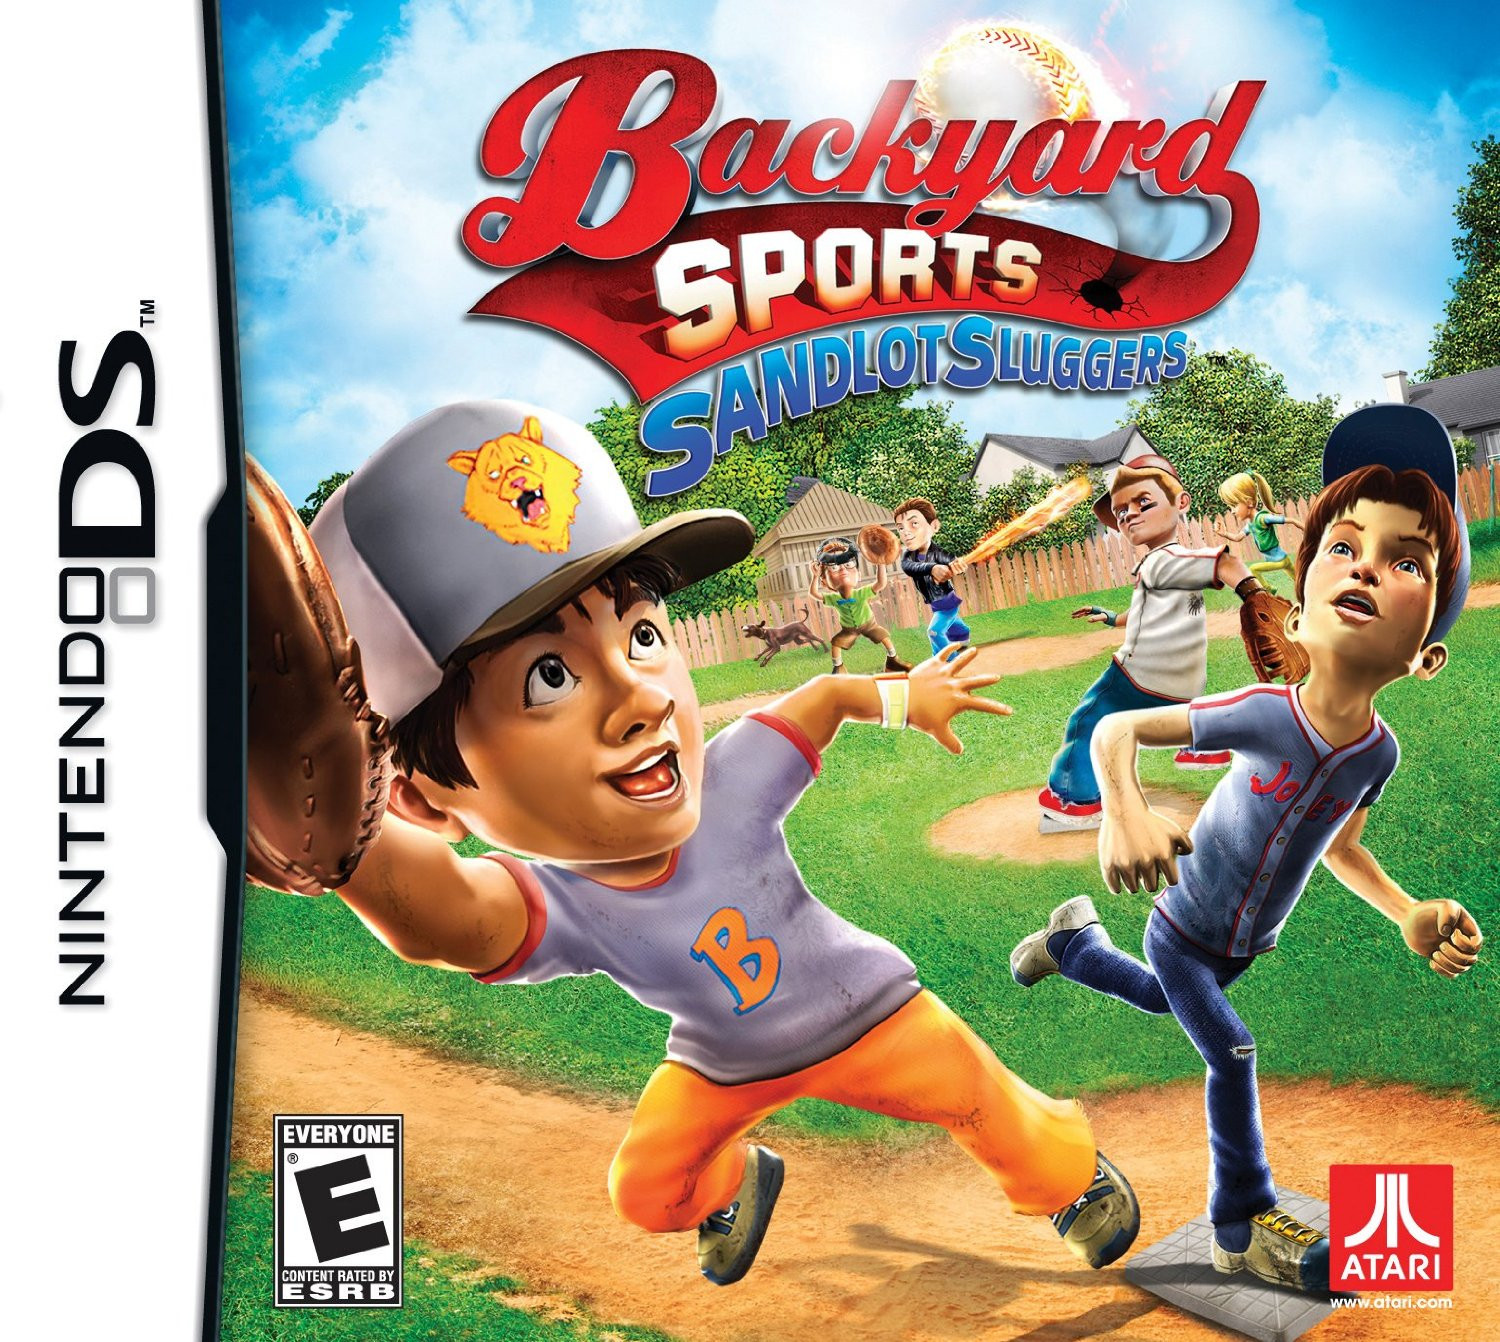 Best ideas about Backyard Sports Games
. Save or Pin Backyard Sports Sandlot Sluggers Now.